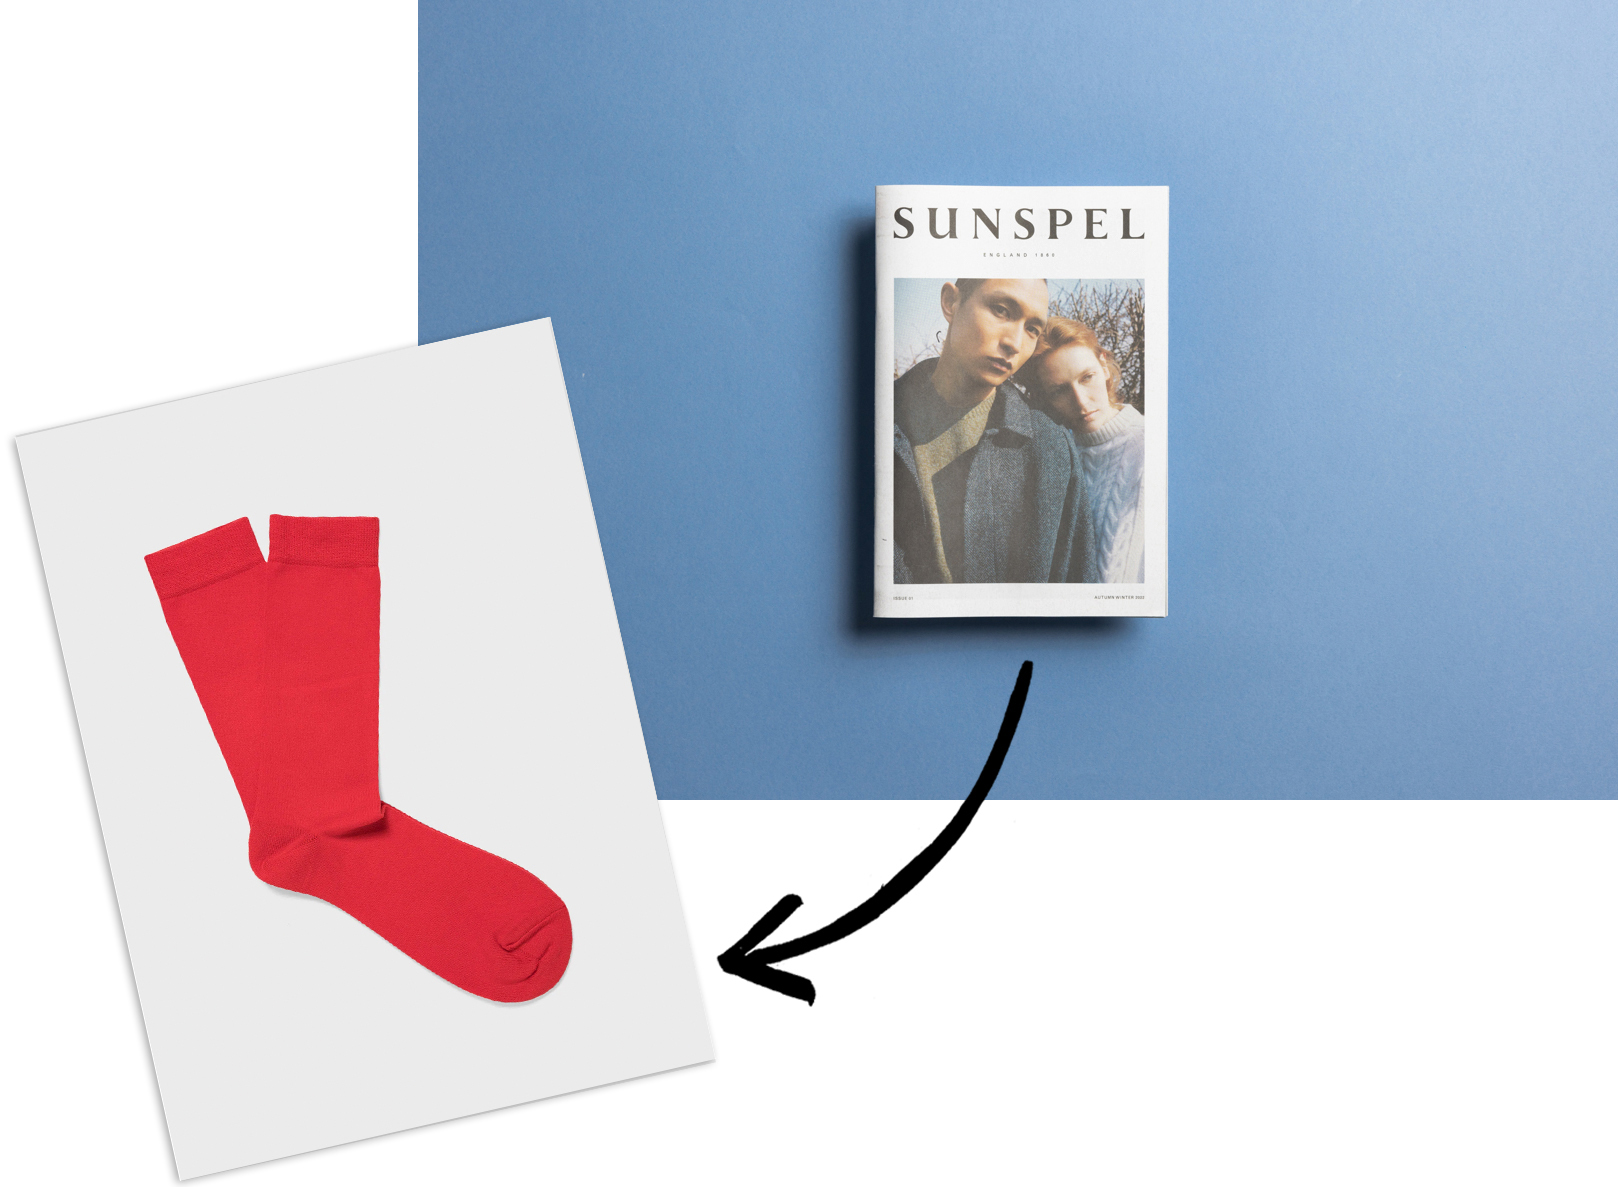 Newspaper Club gift guide: Sunspel socks